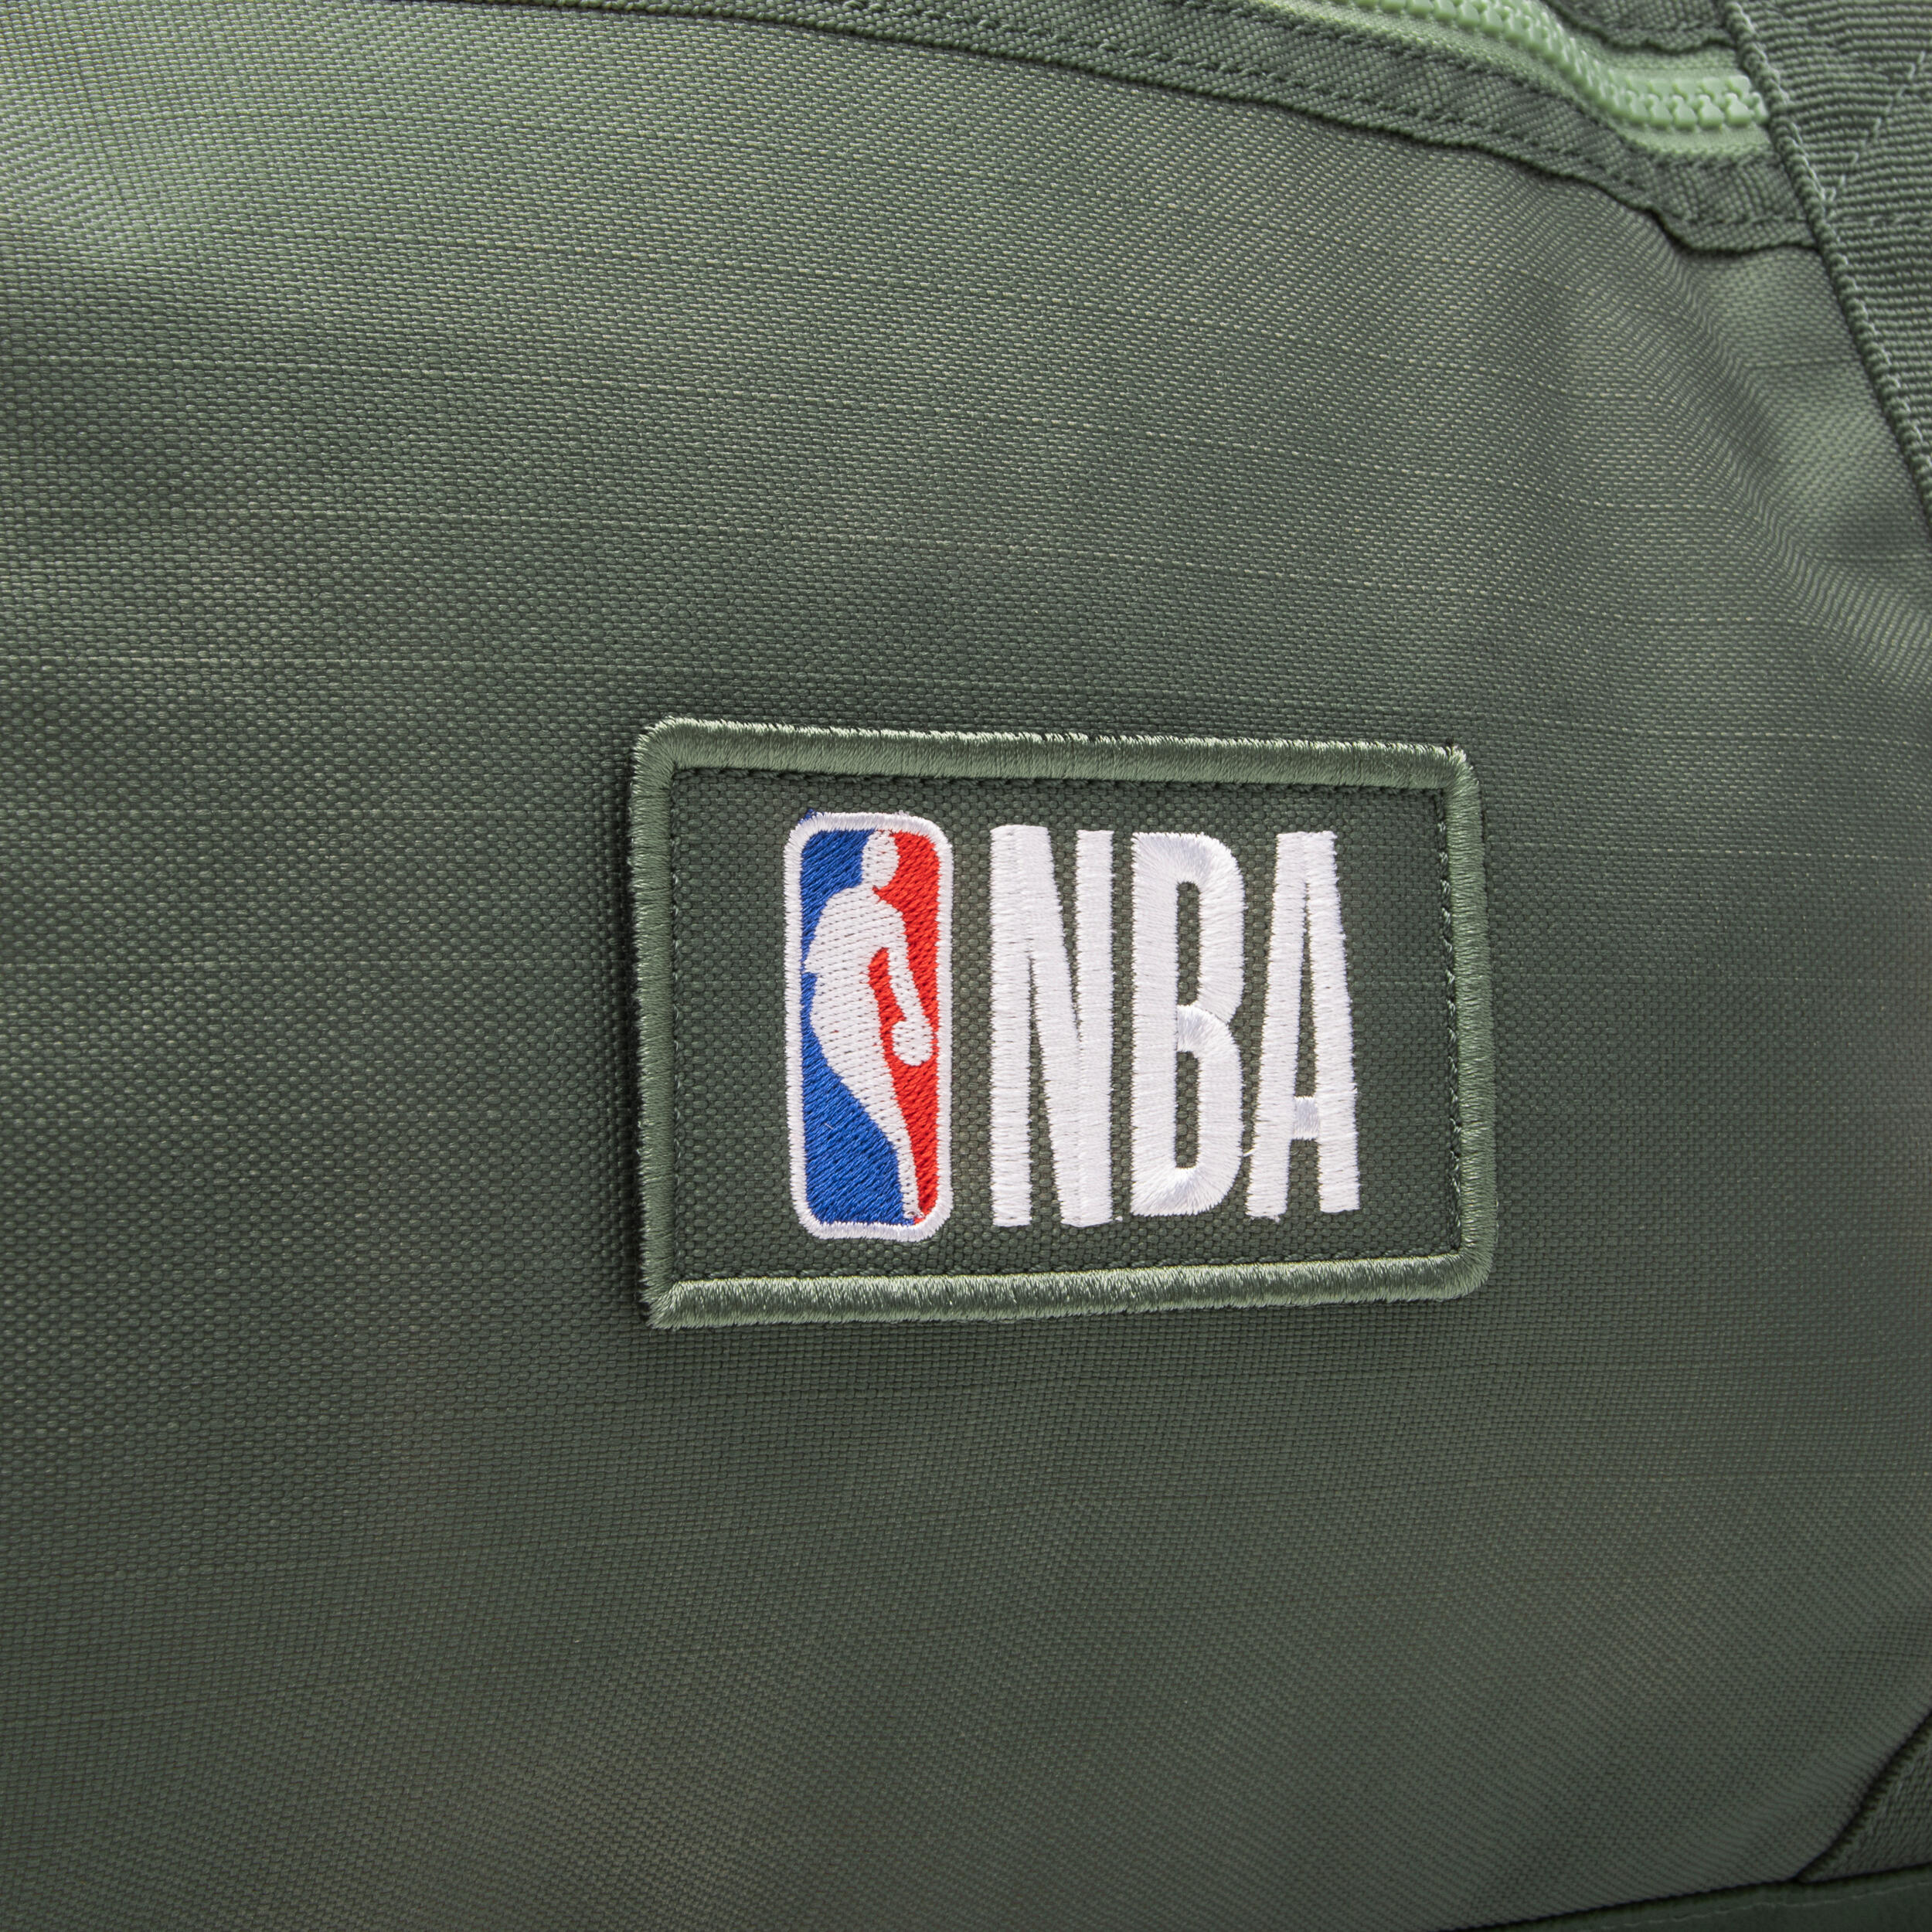 Basketball Sports Bag NBA Lakers - Green 3/7